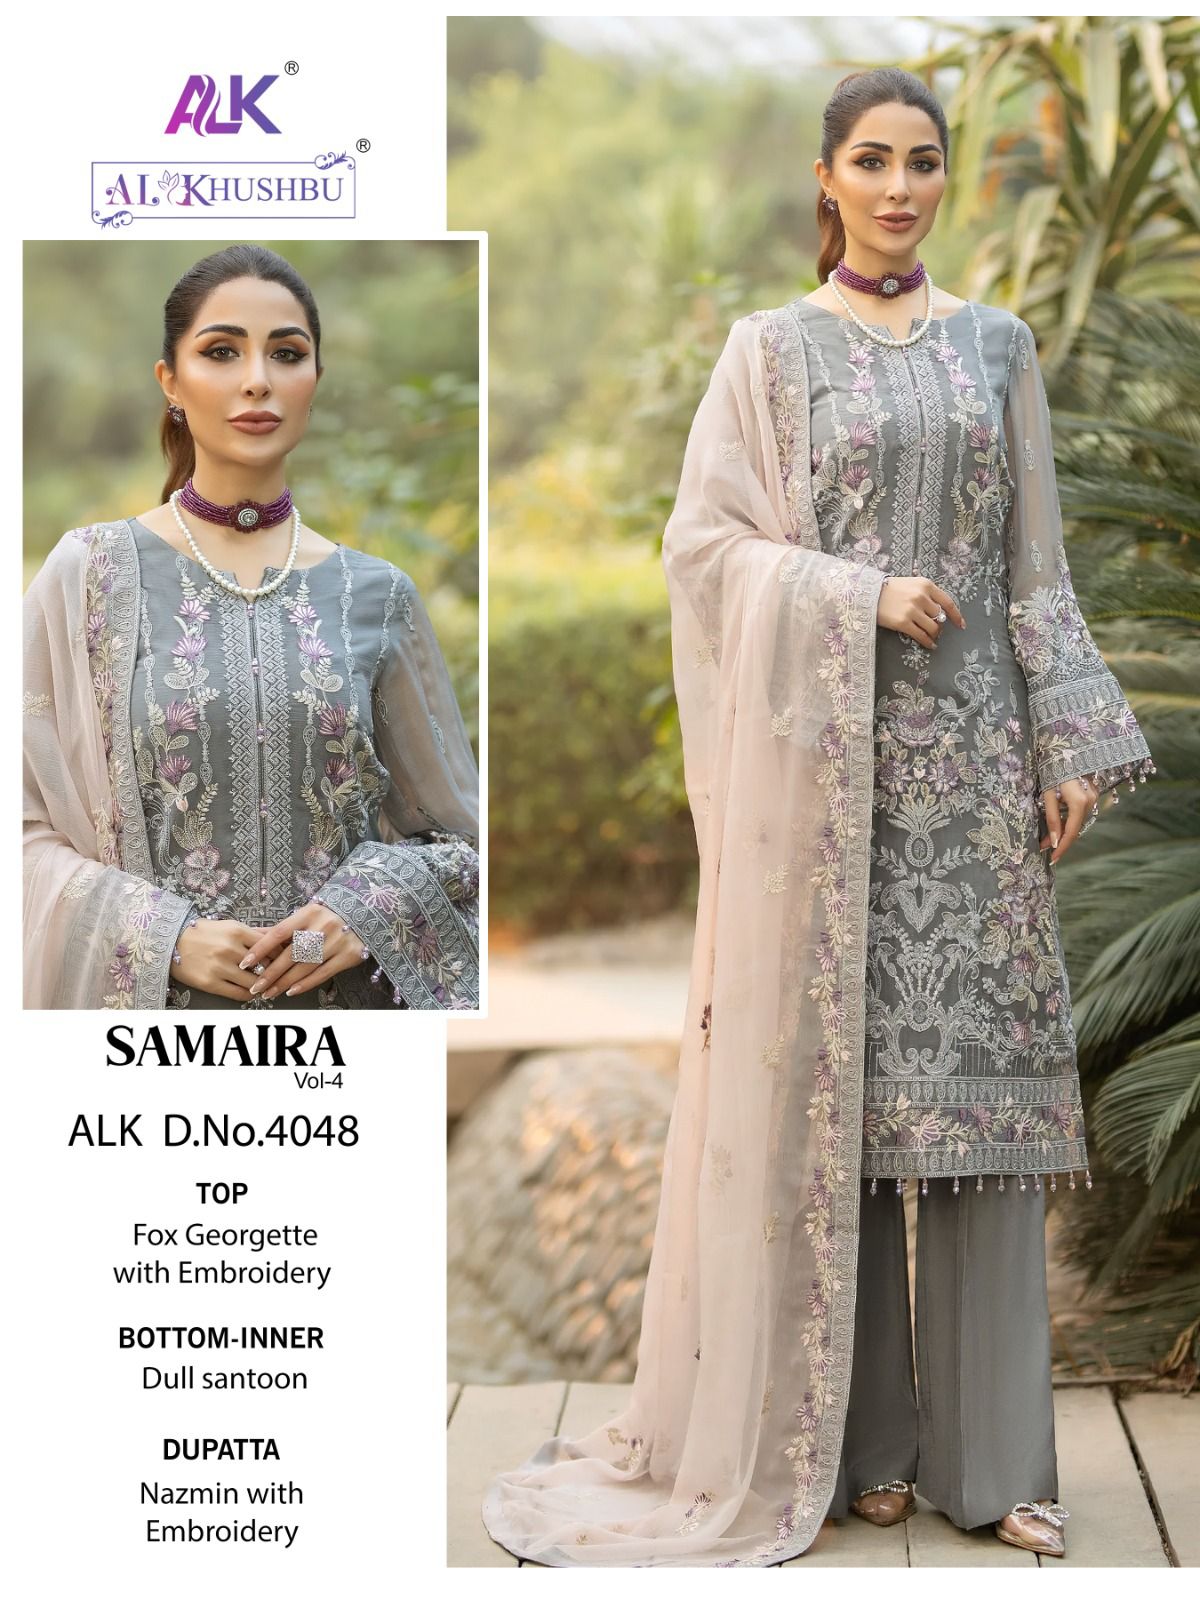 al khushbu samaira vol 4 alk d no 4047 4048 4049 georgette attractive look salwar suit catalog